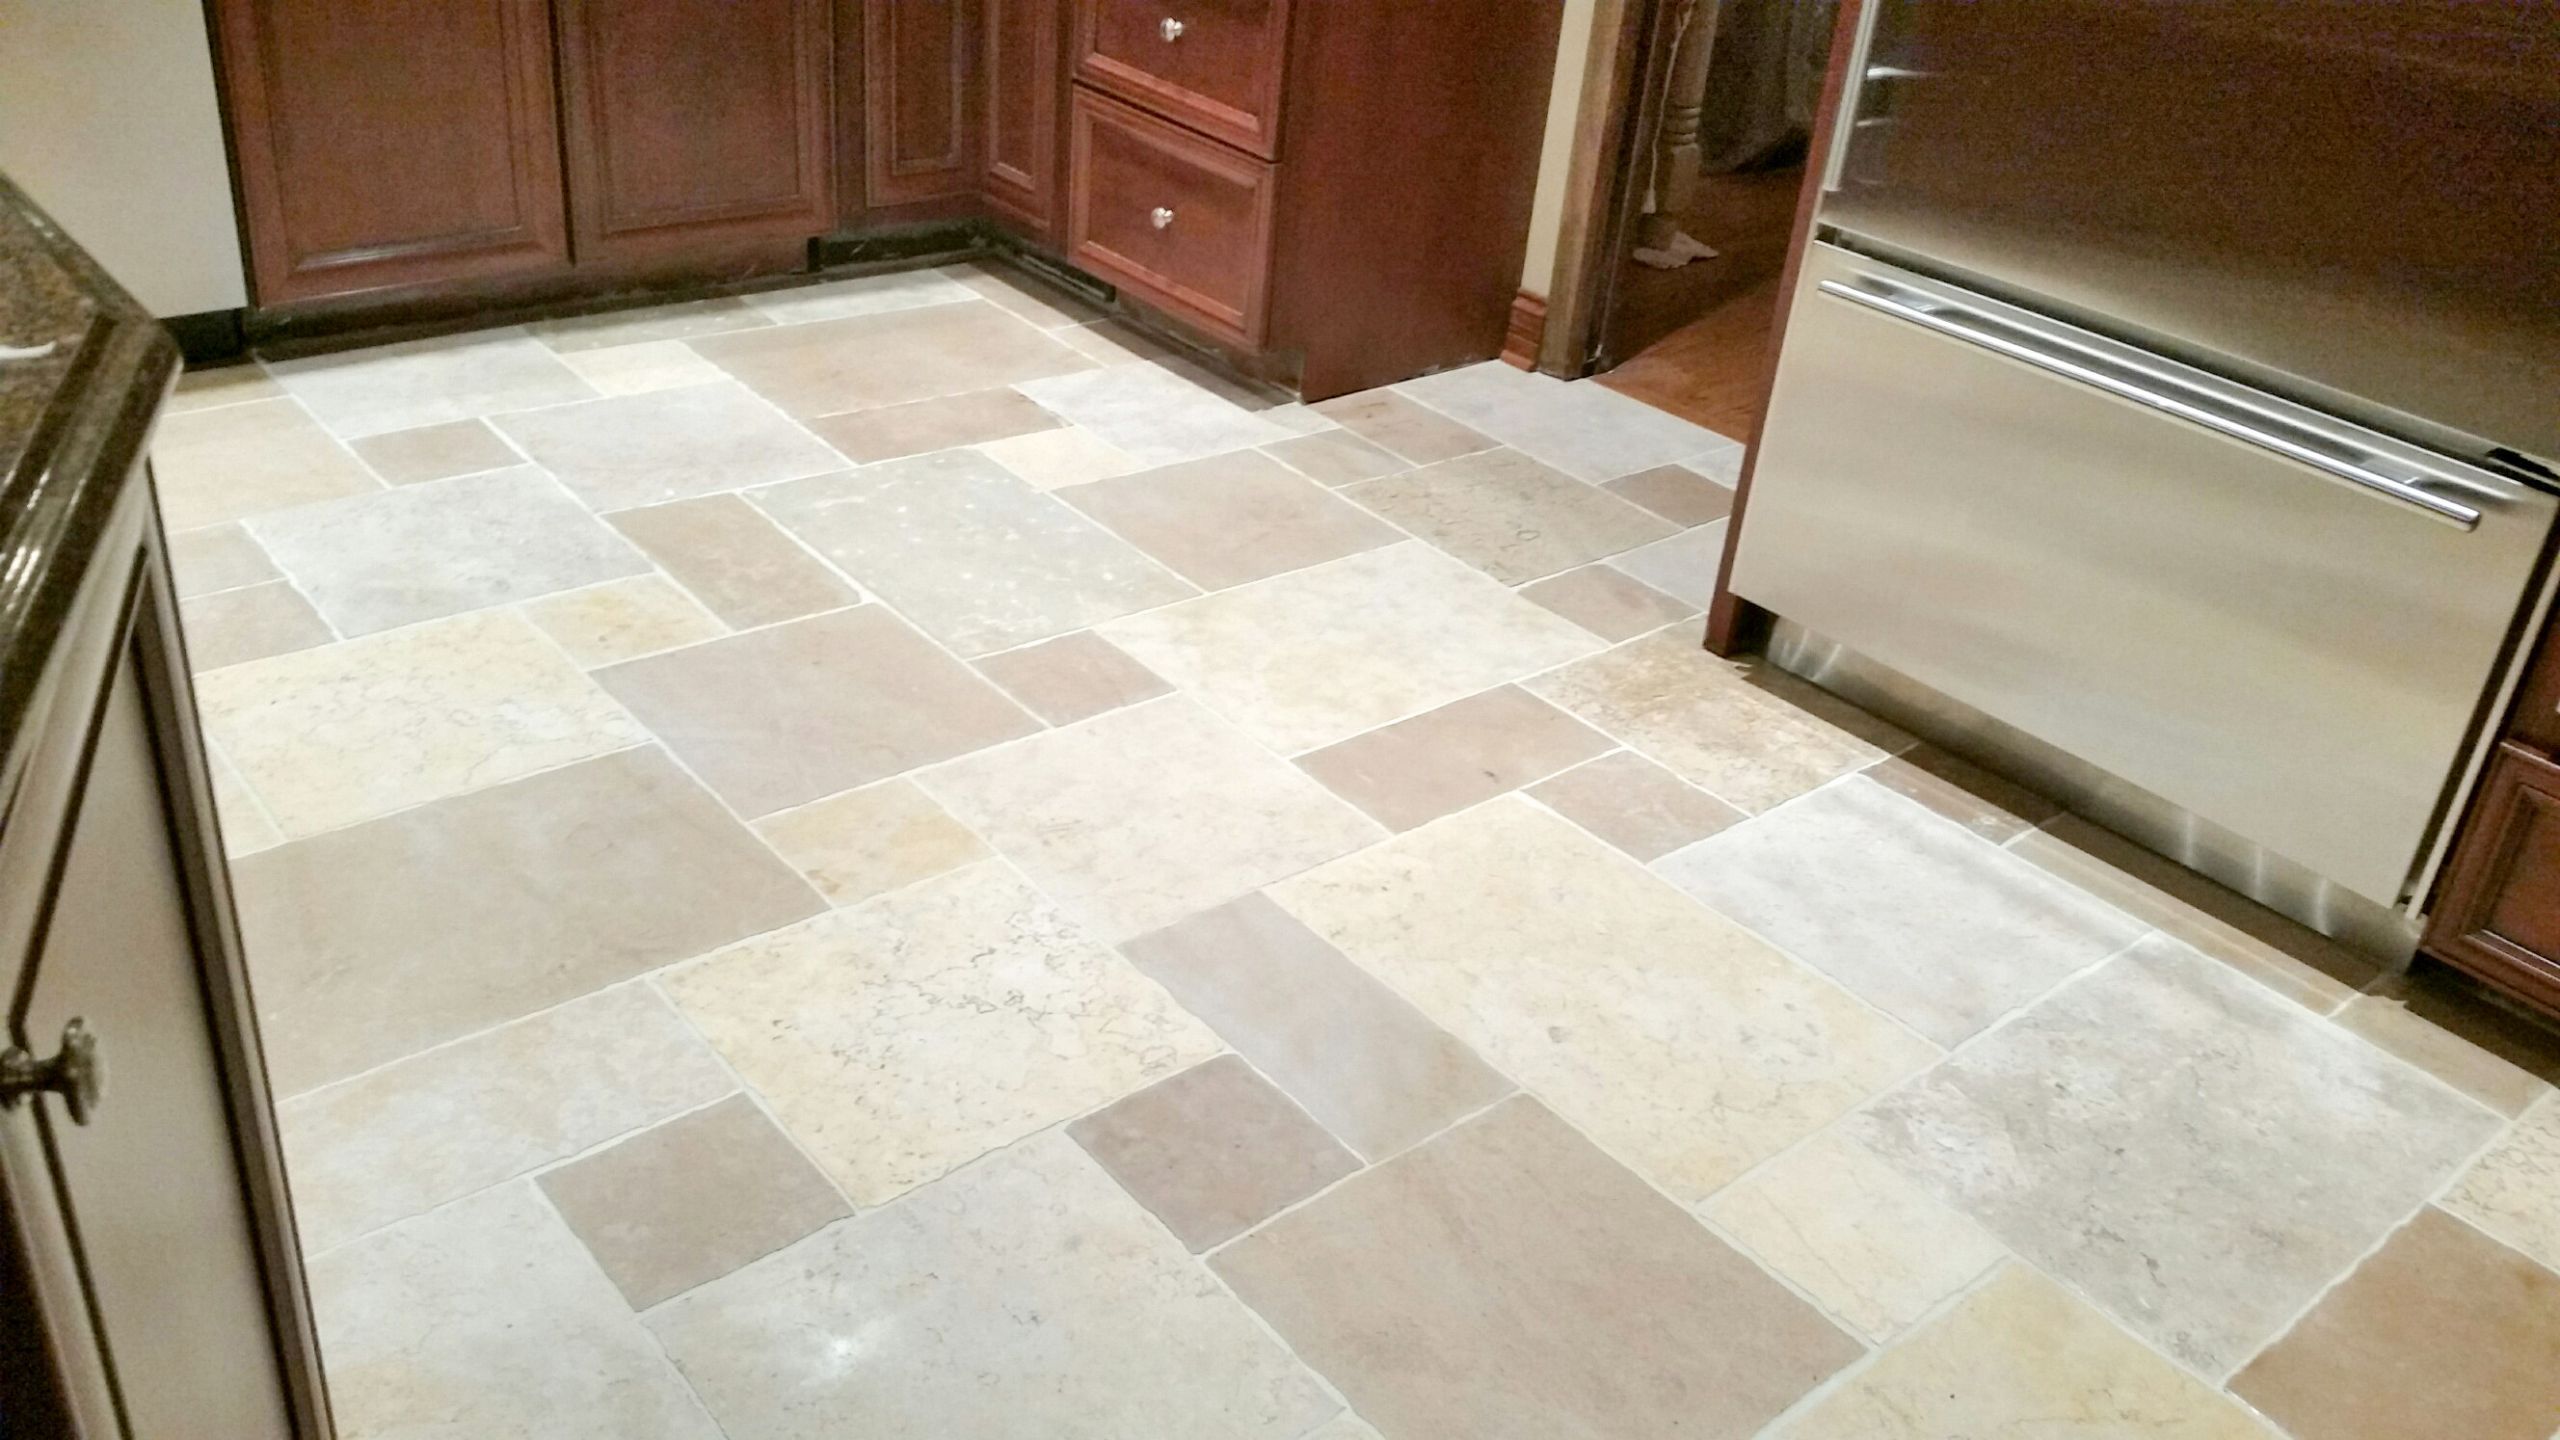 Kitchen Flooring Ceramic Tiles
 Why Choose Ceramic Tile for Your Floor